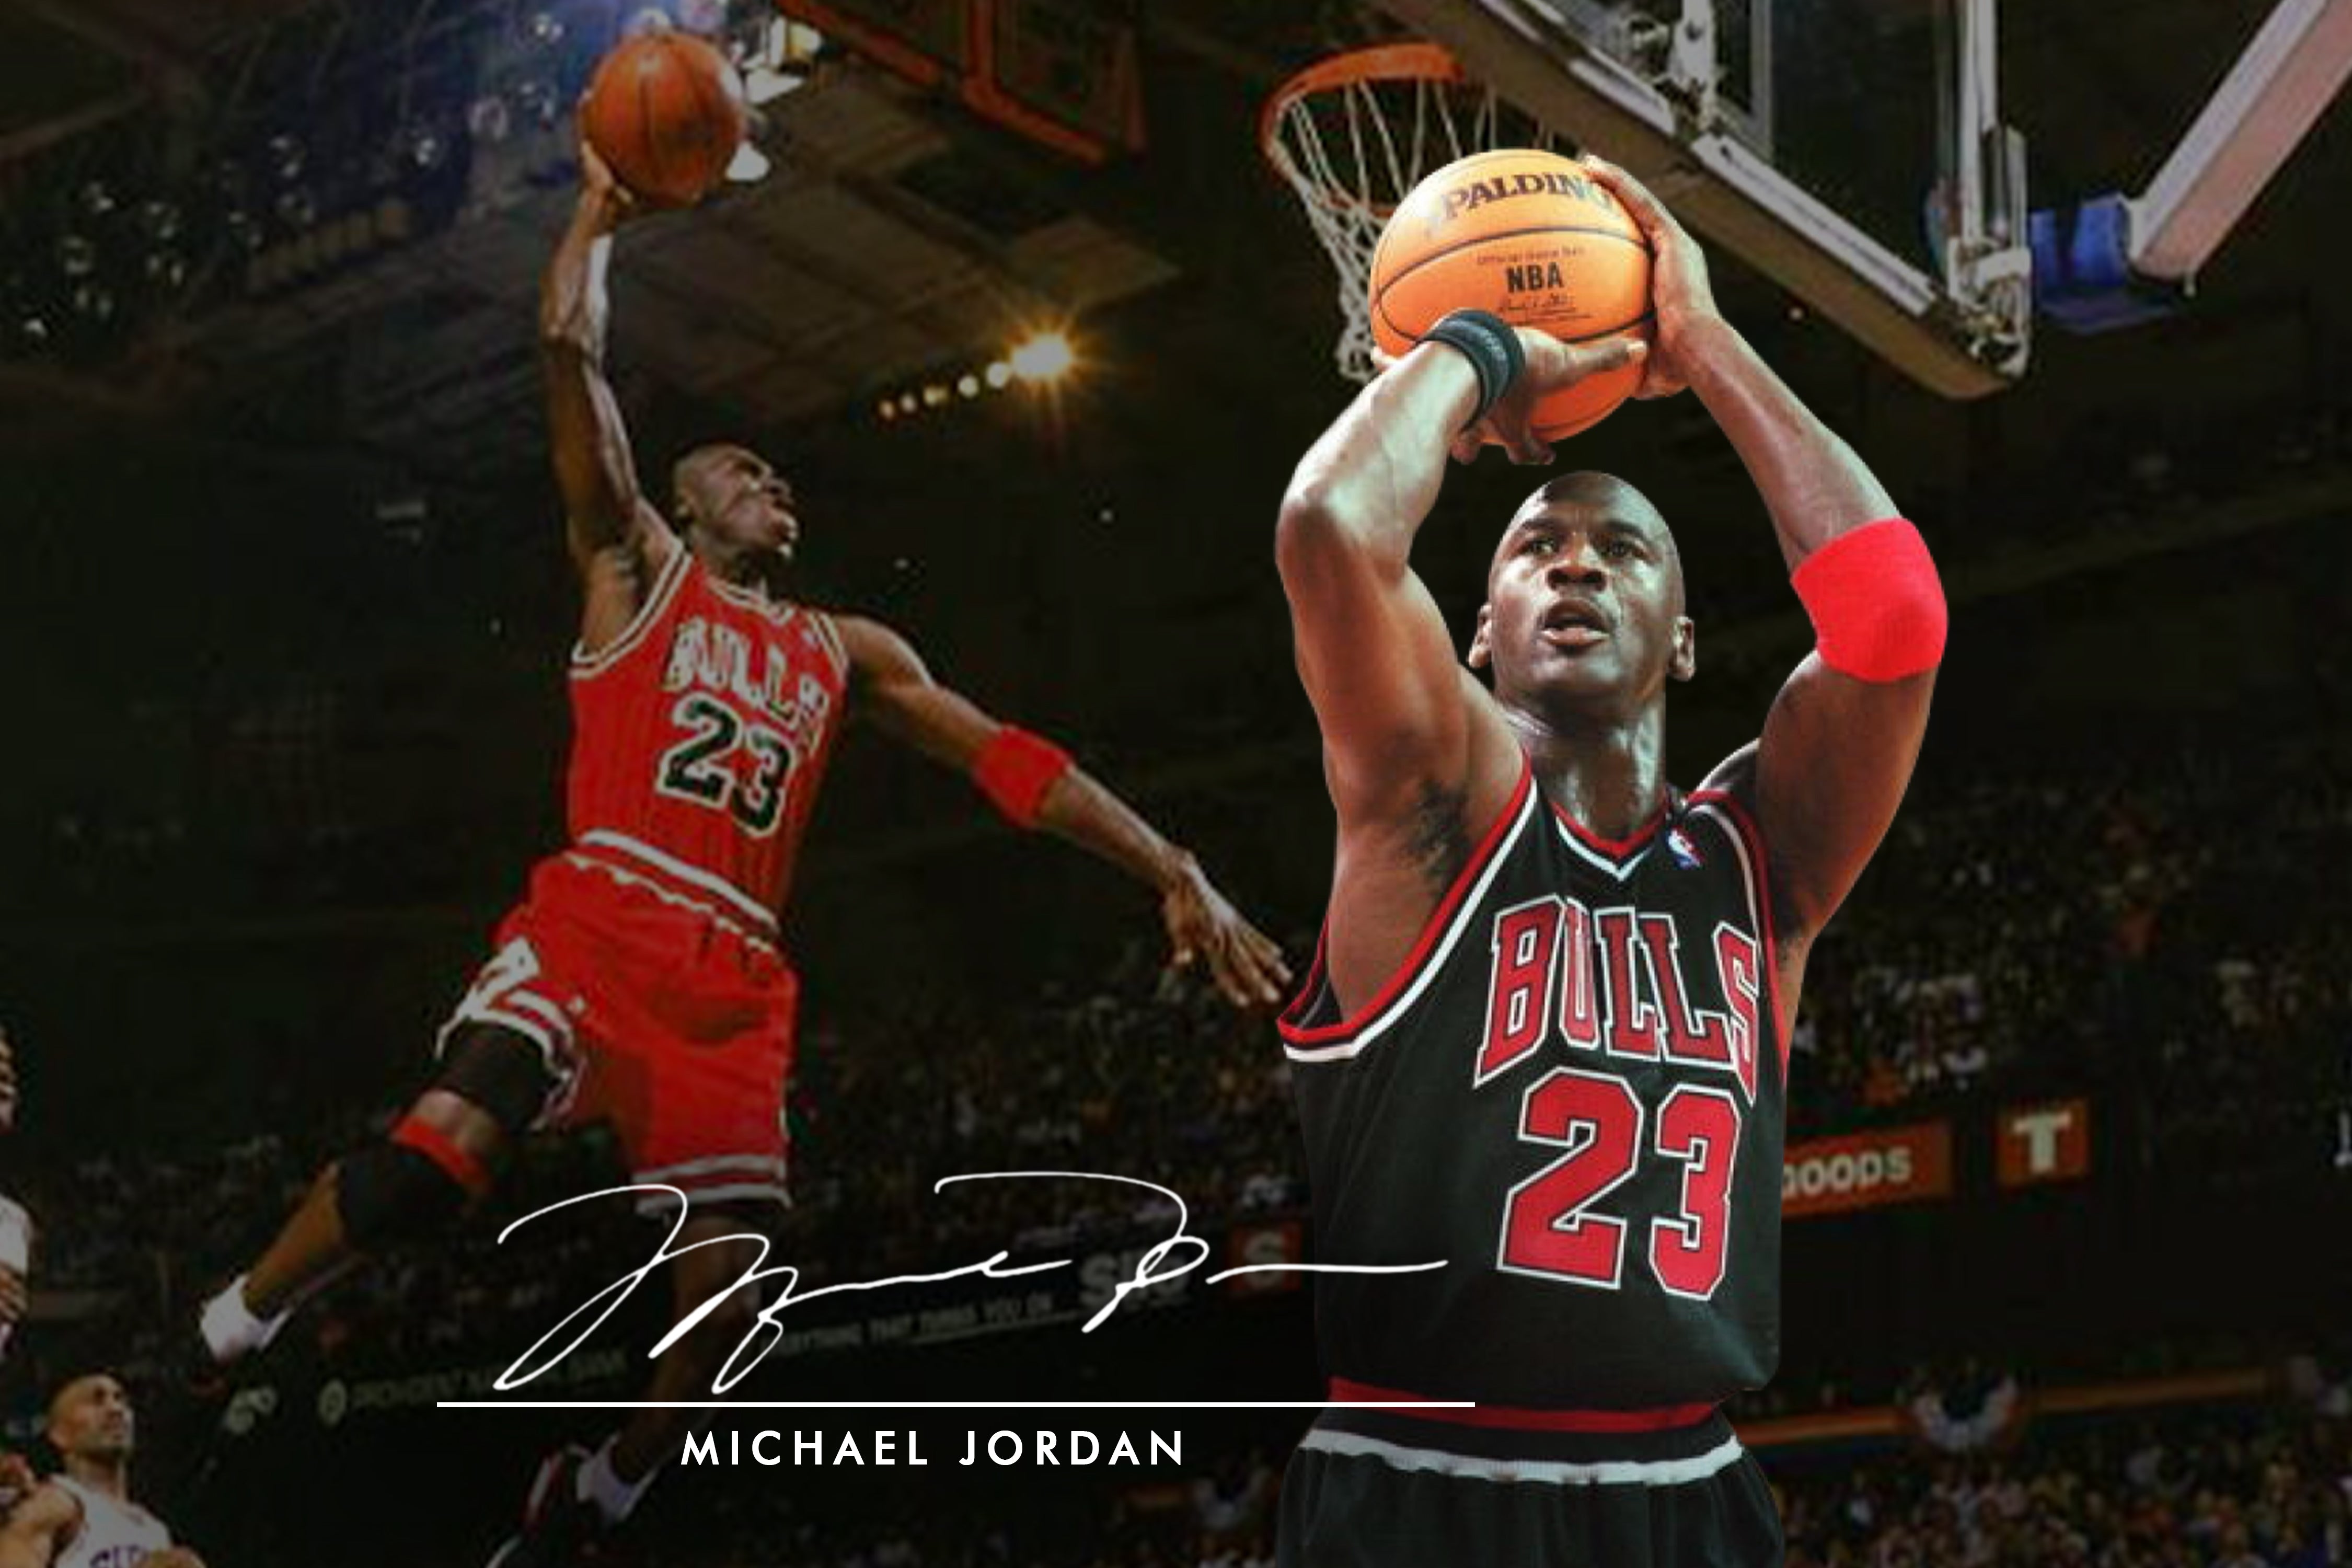 Michael Jordan Signed Photo: Six Banners